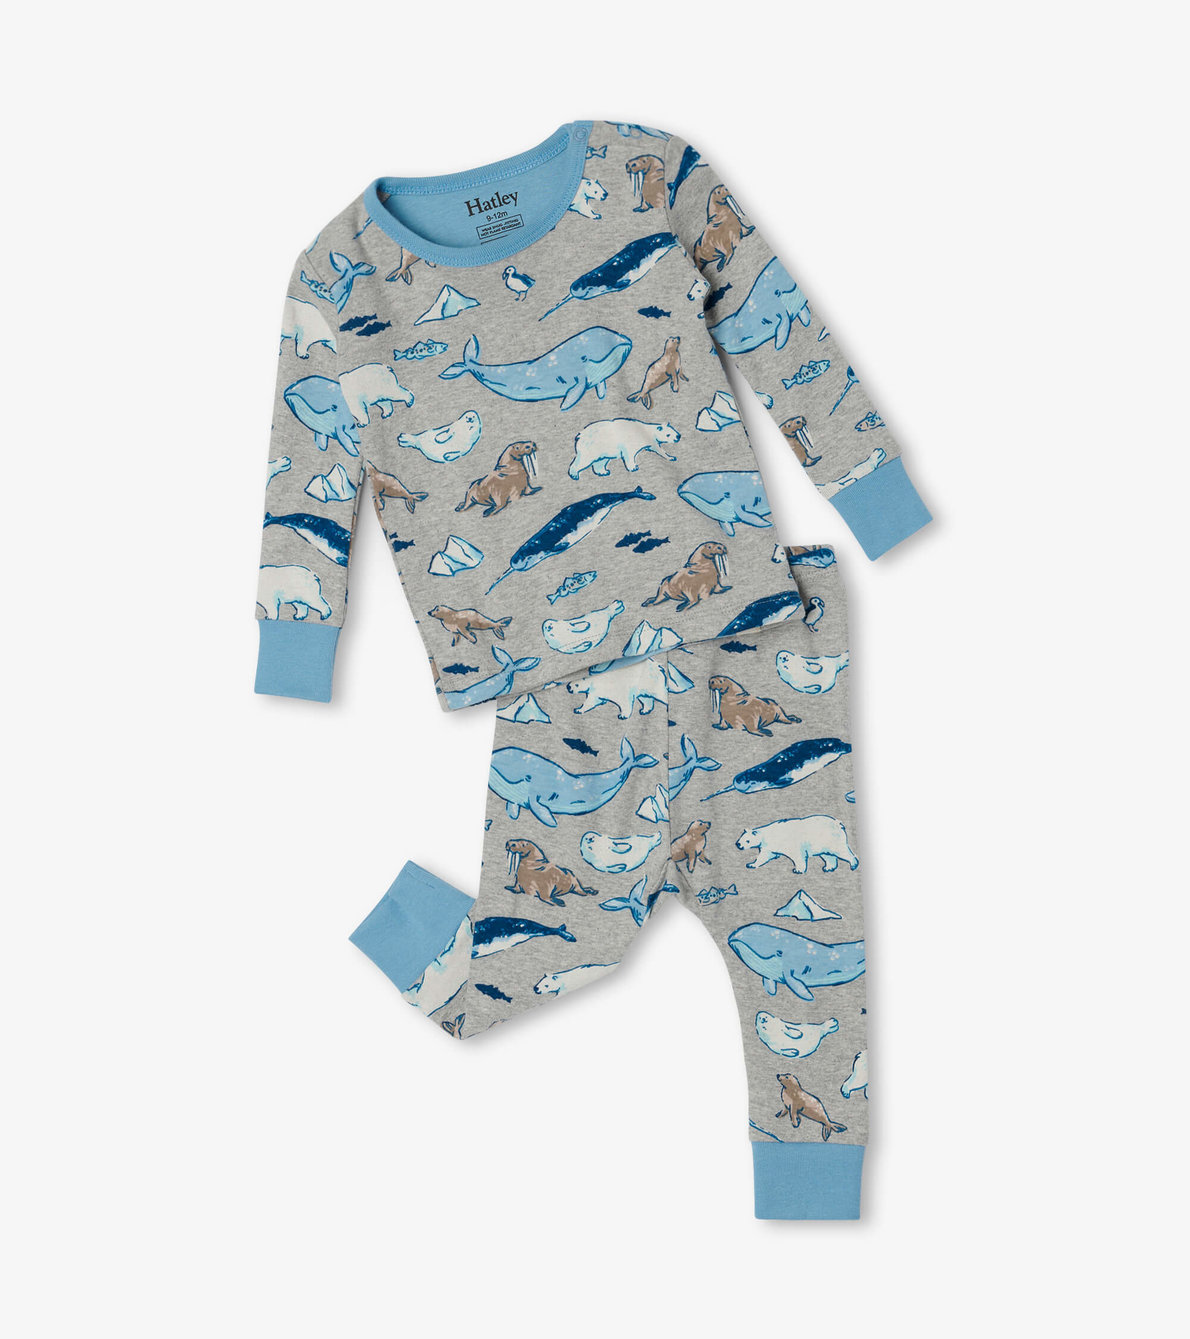 View larger image of Arctic Animals Organic Cotton Baby Pajama Set